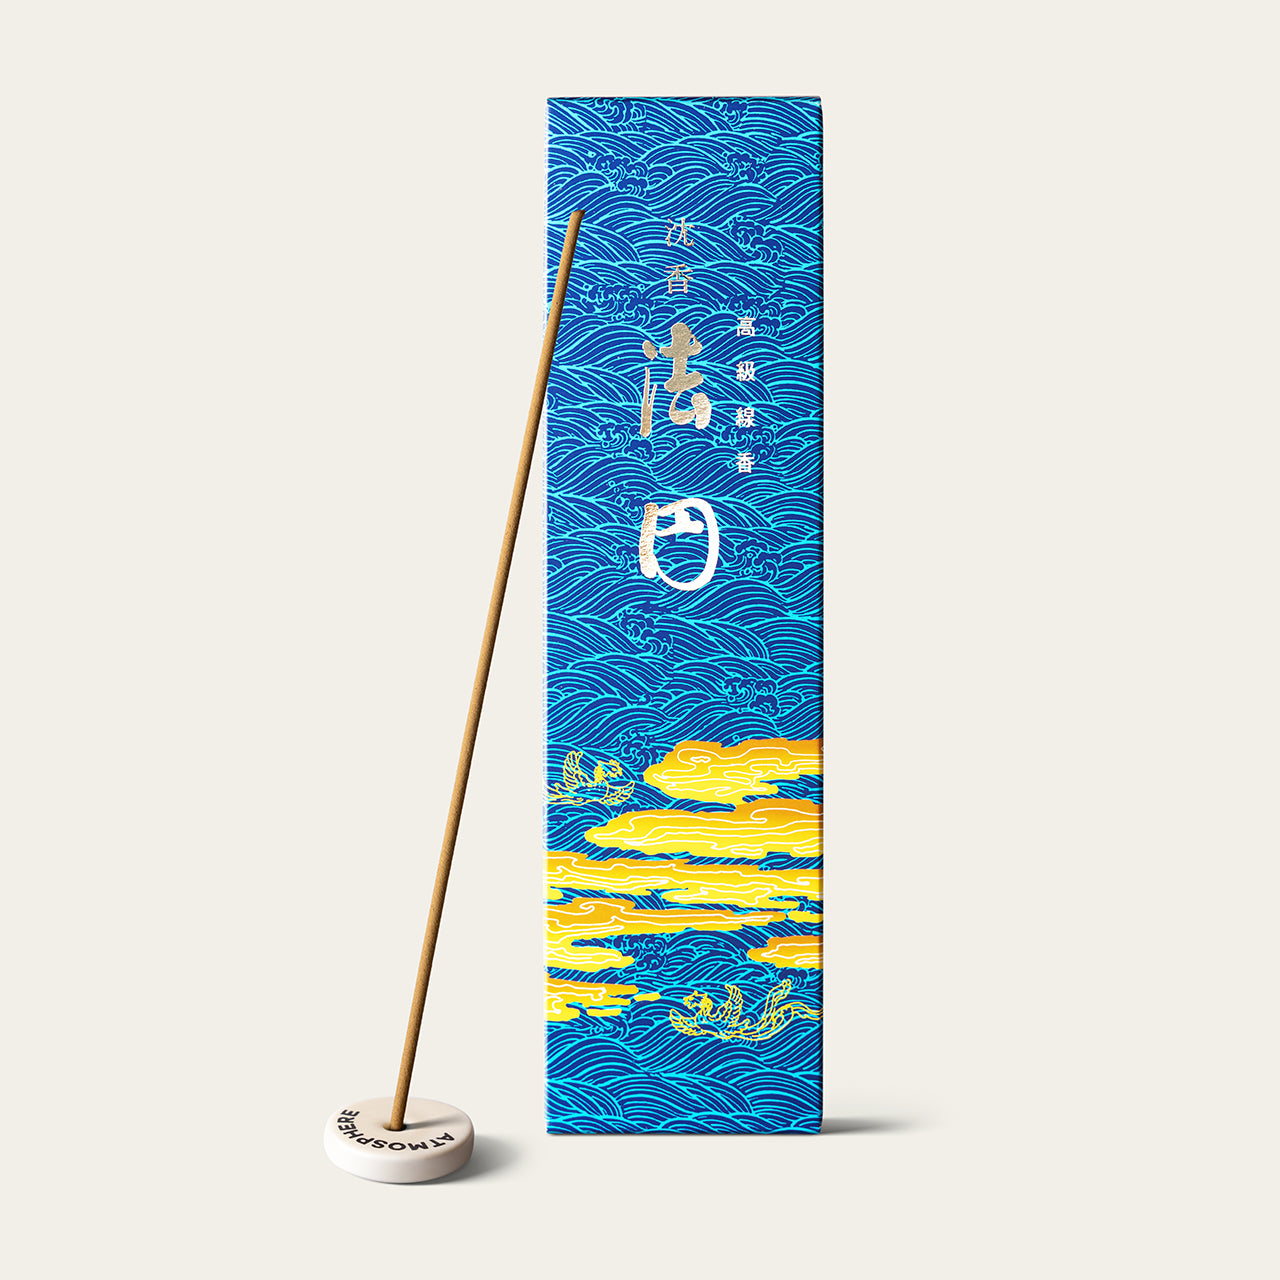 Gyokushodo Jinko Hoen Agarwood Cycle Japanese incense sticks (25 sticks) with Atmosphere ceramic incense holder